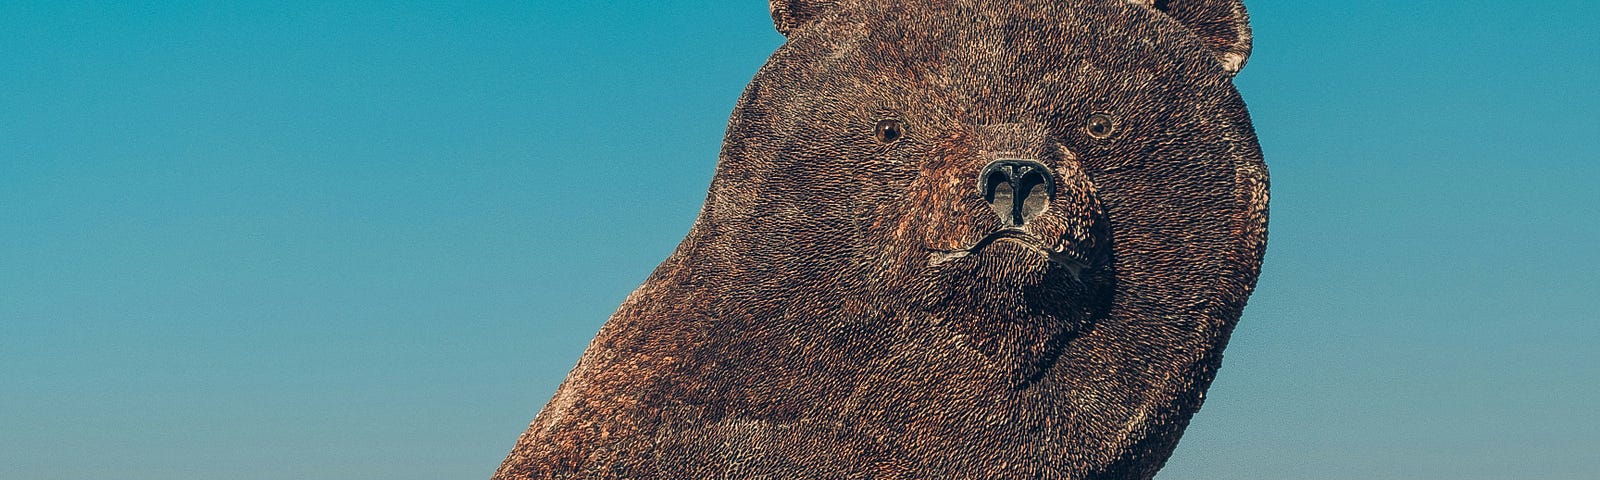 Rock sculpture of a bear against a blue sky.